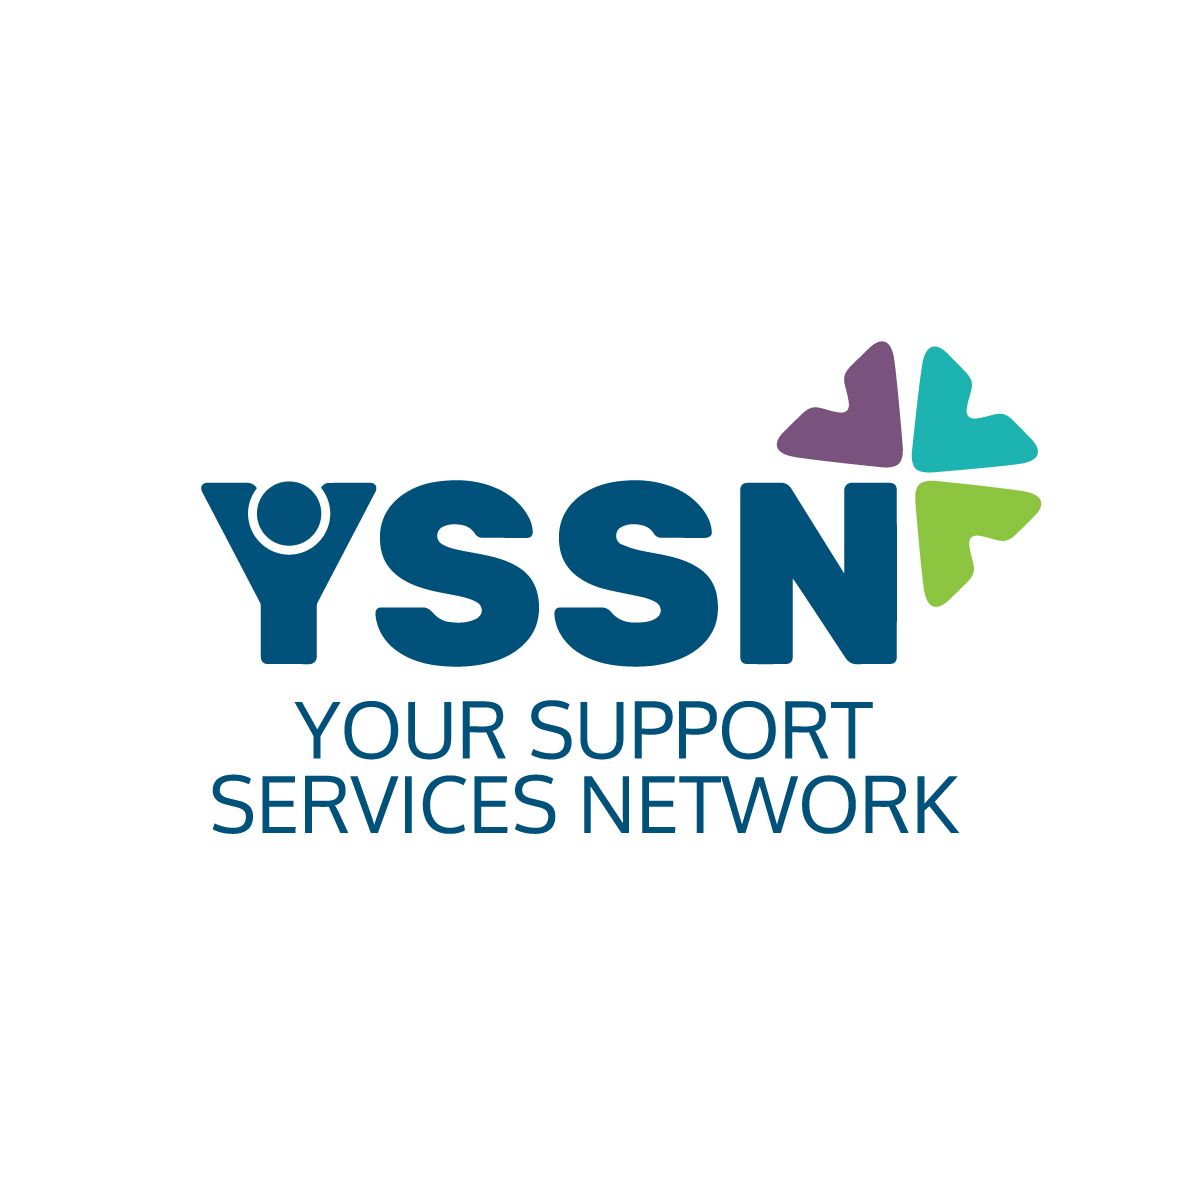 Organization logo of York Support Services Network